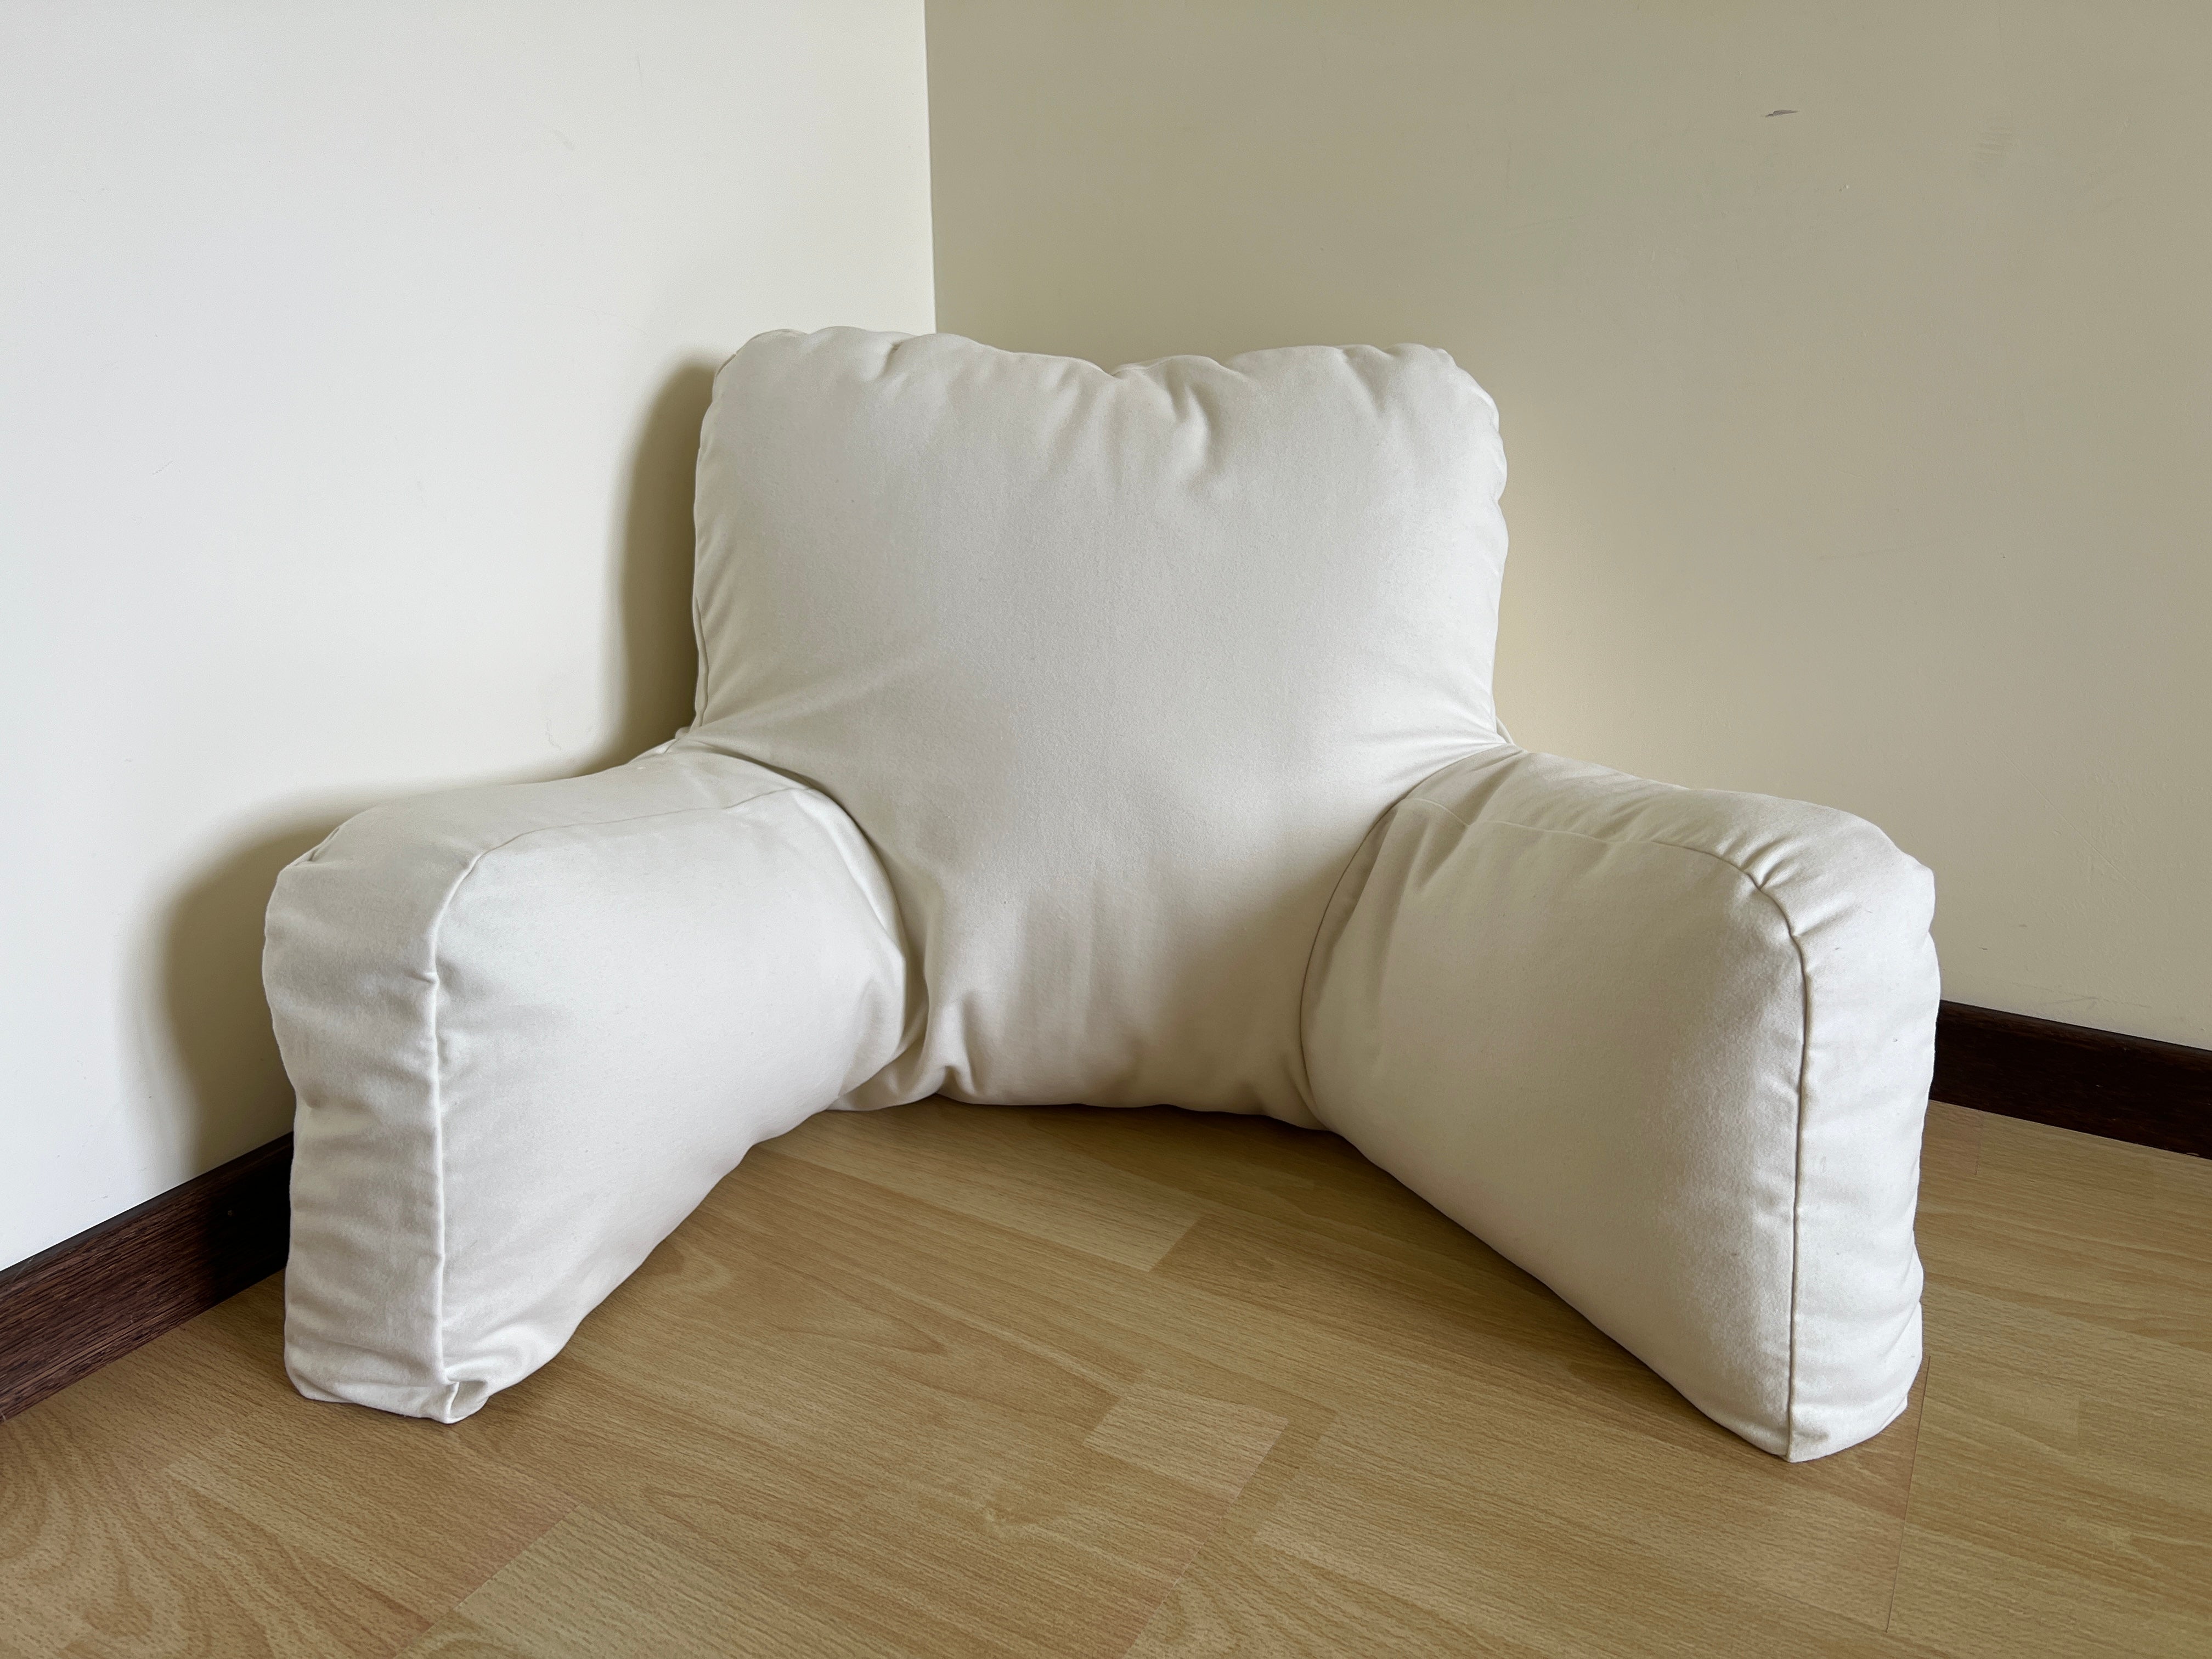 Custom Organic Cotton Tufted Seat Cushion, Cottoned Shop